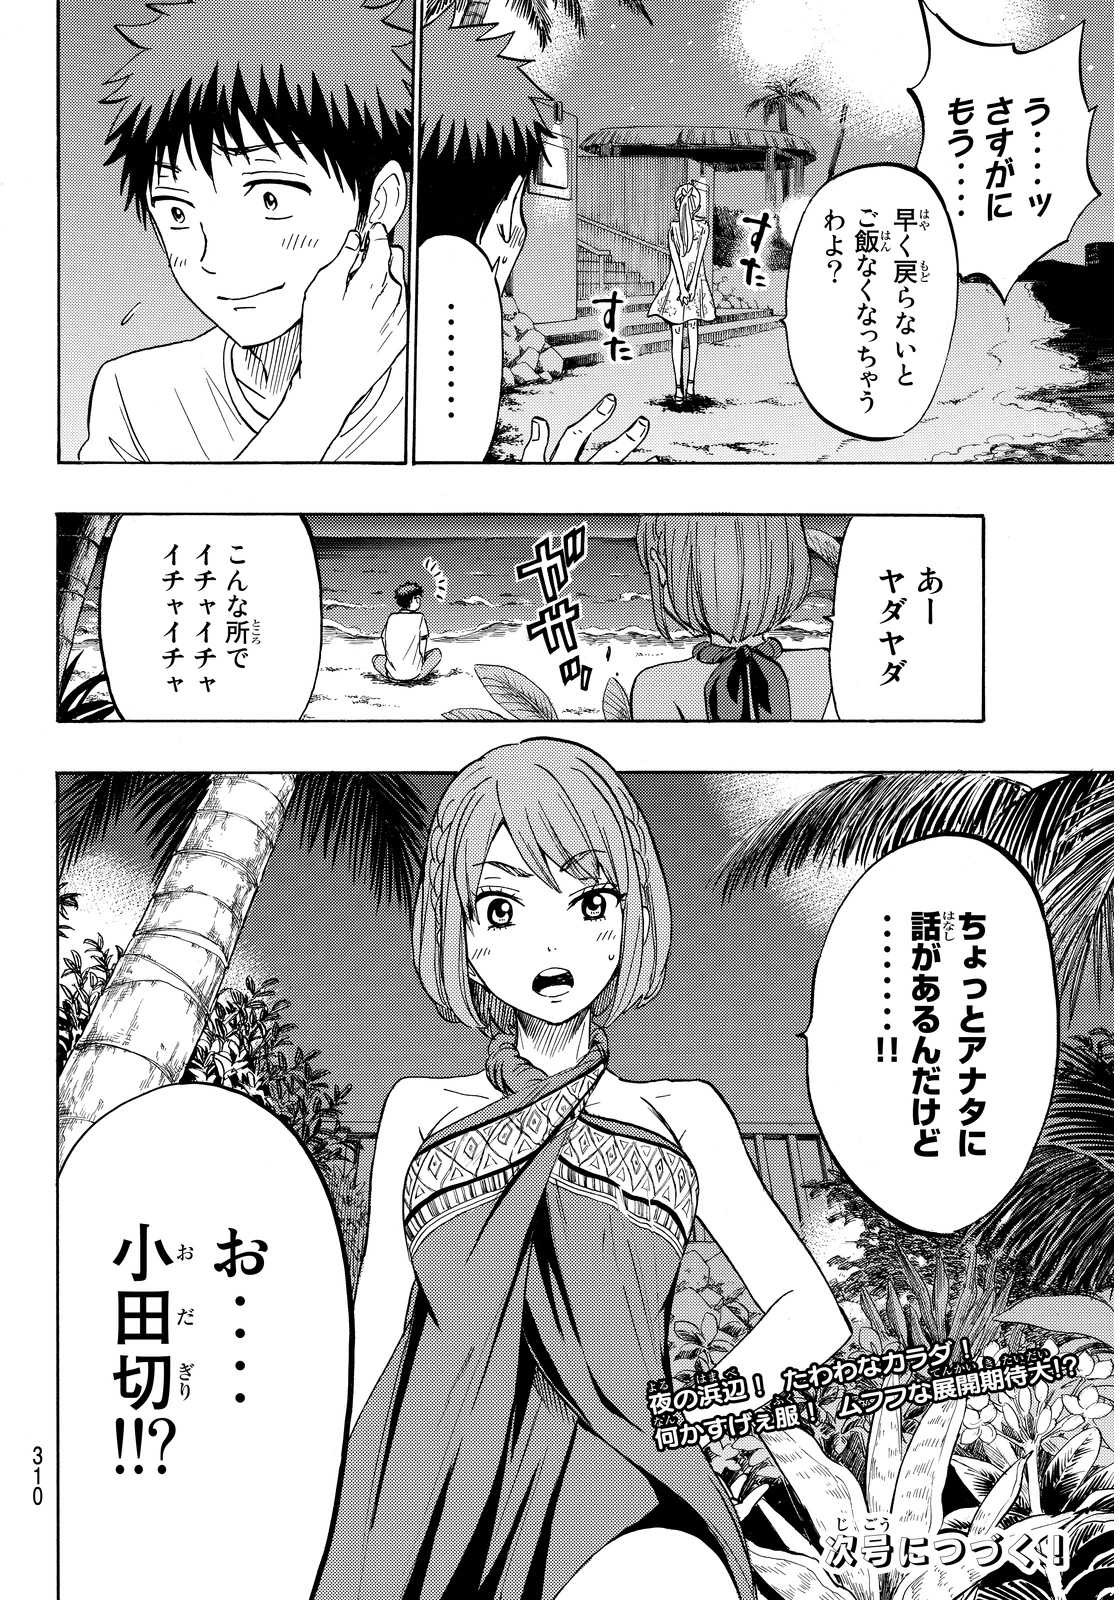 Yamada-kun to 7-nin no Majo - Chapter 203 - Page 20